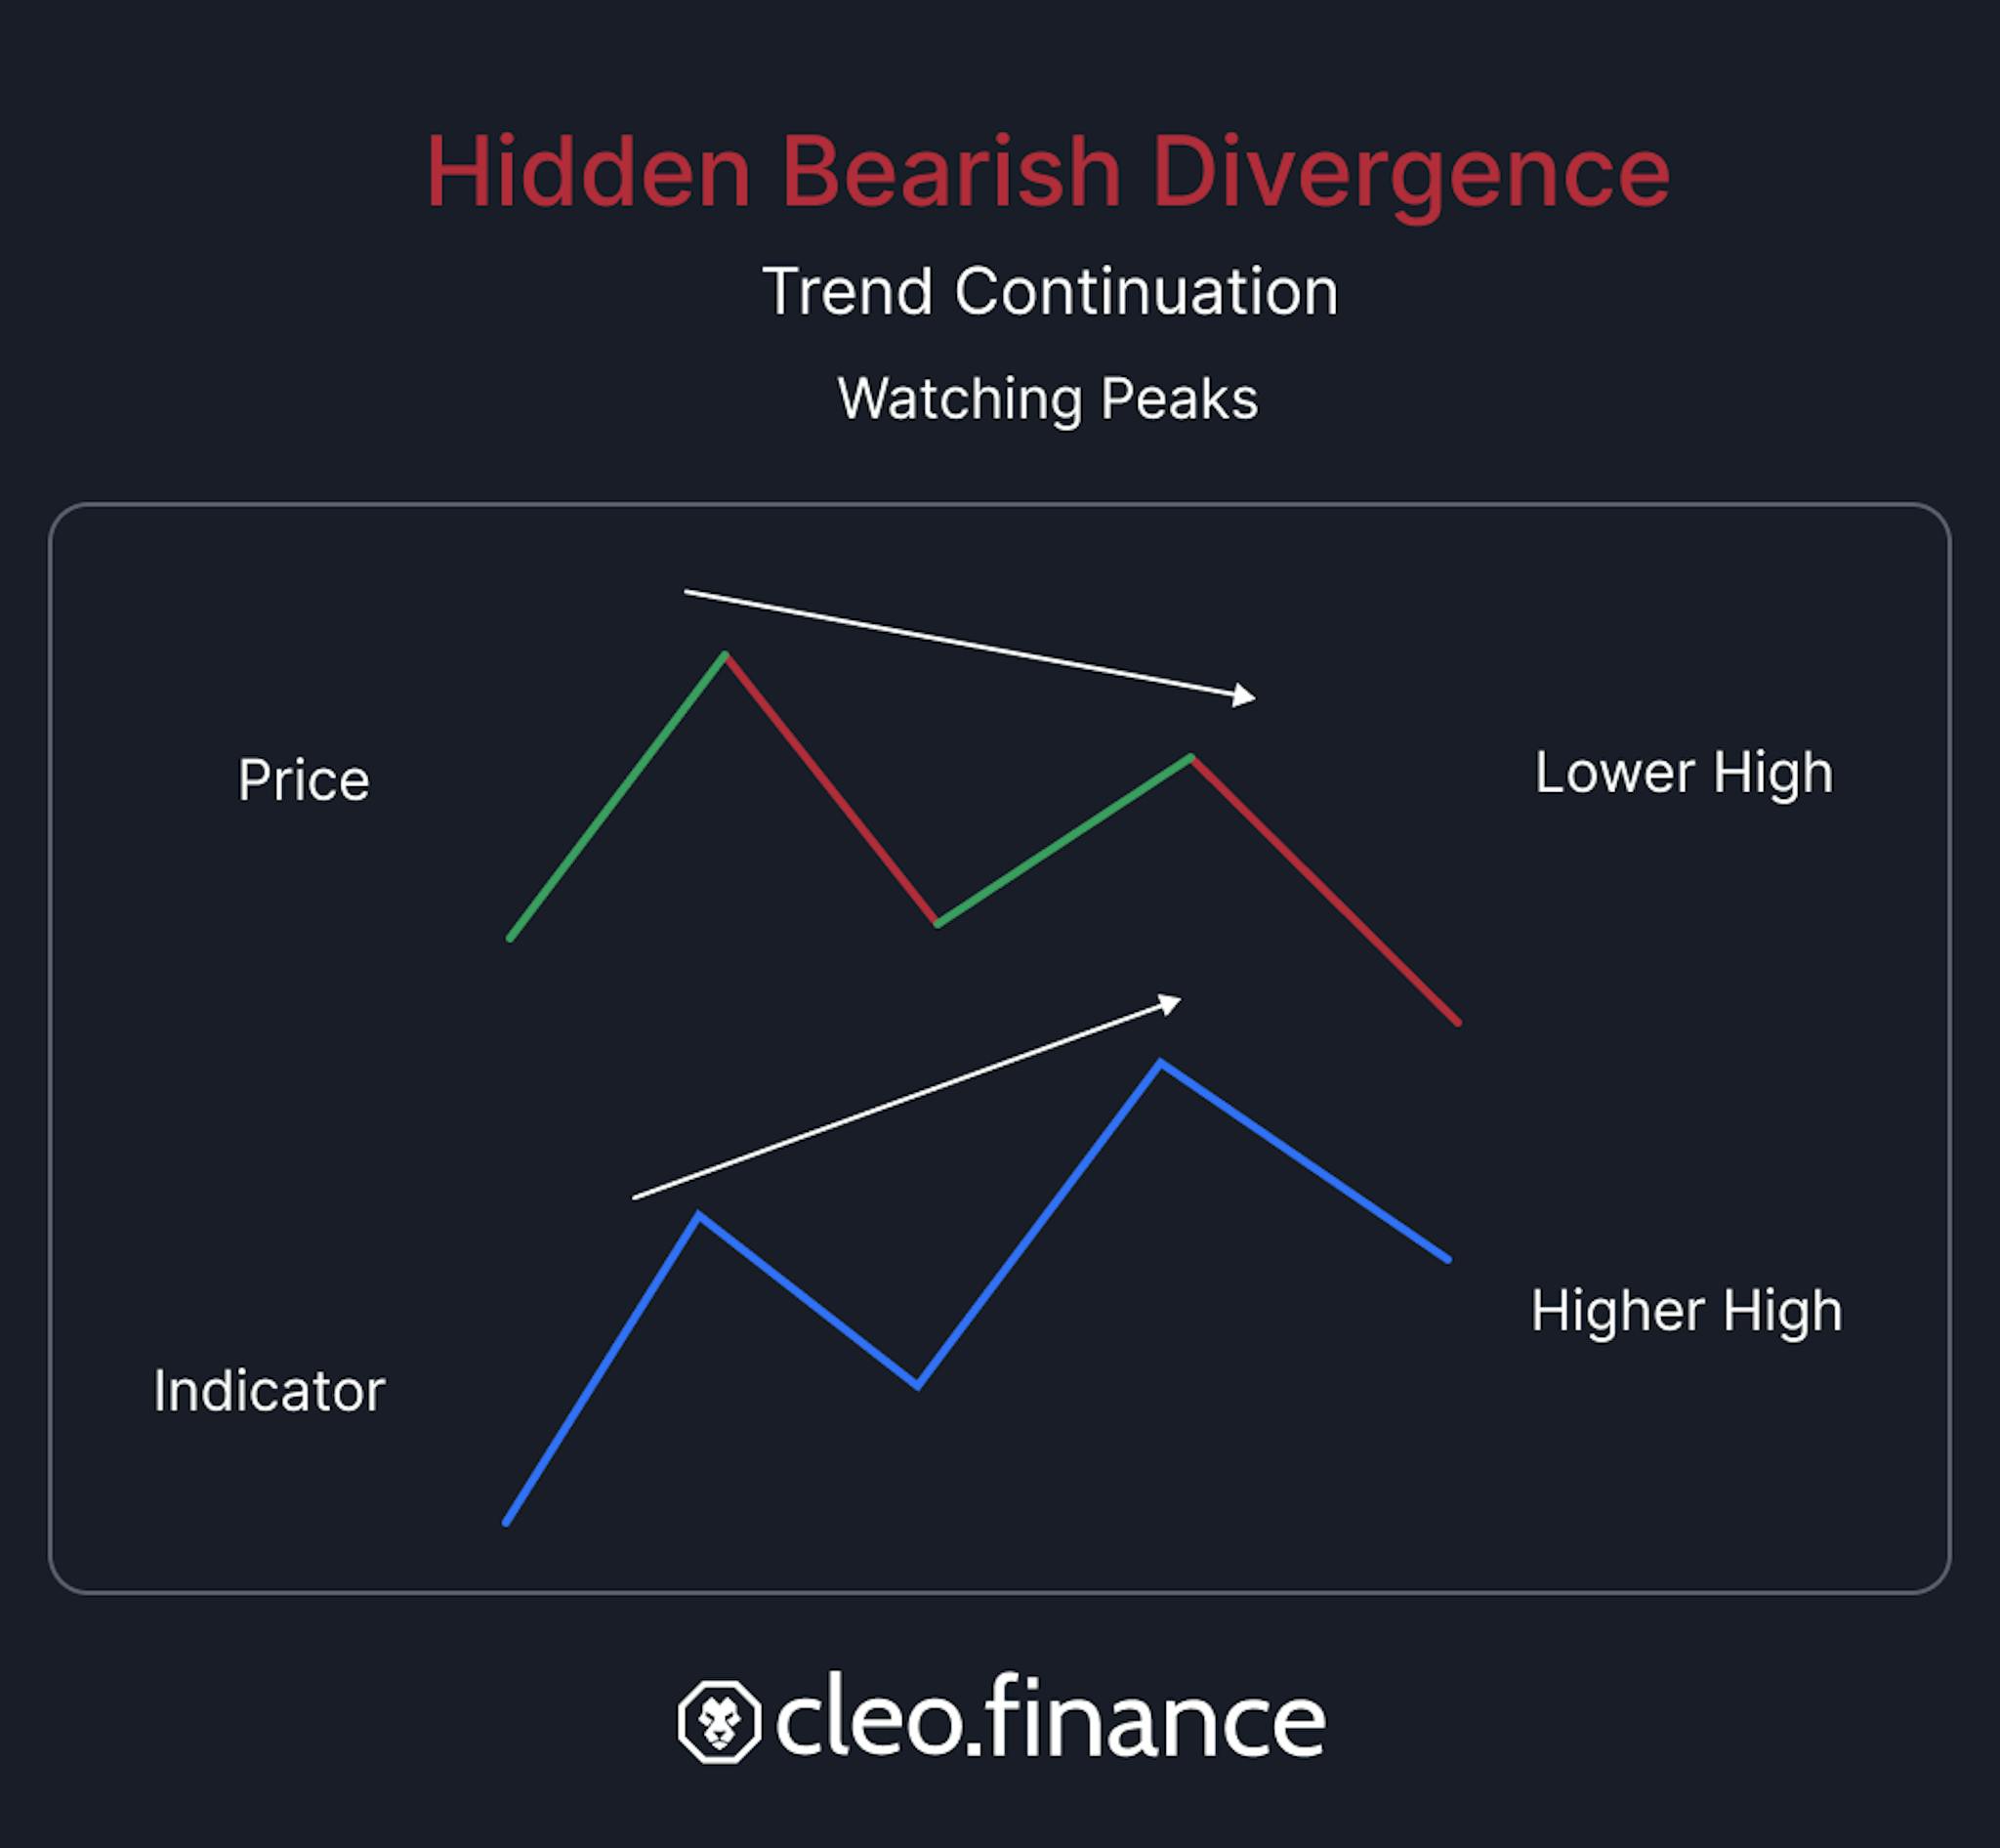 Hidden Bearish Divergence explanation